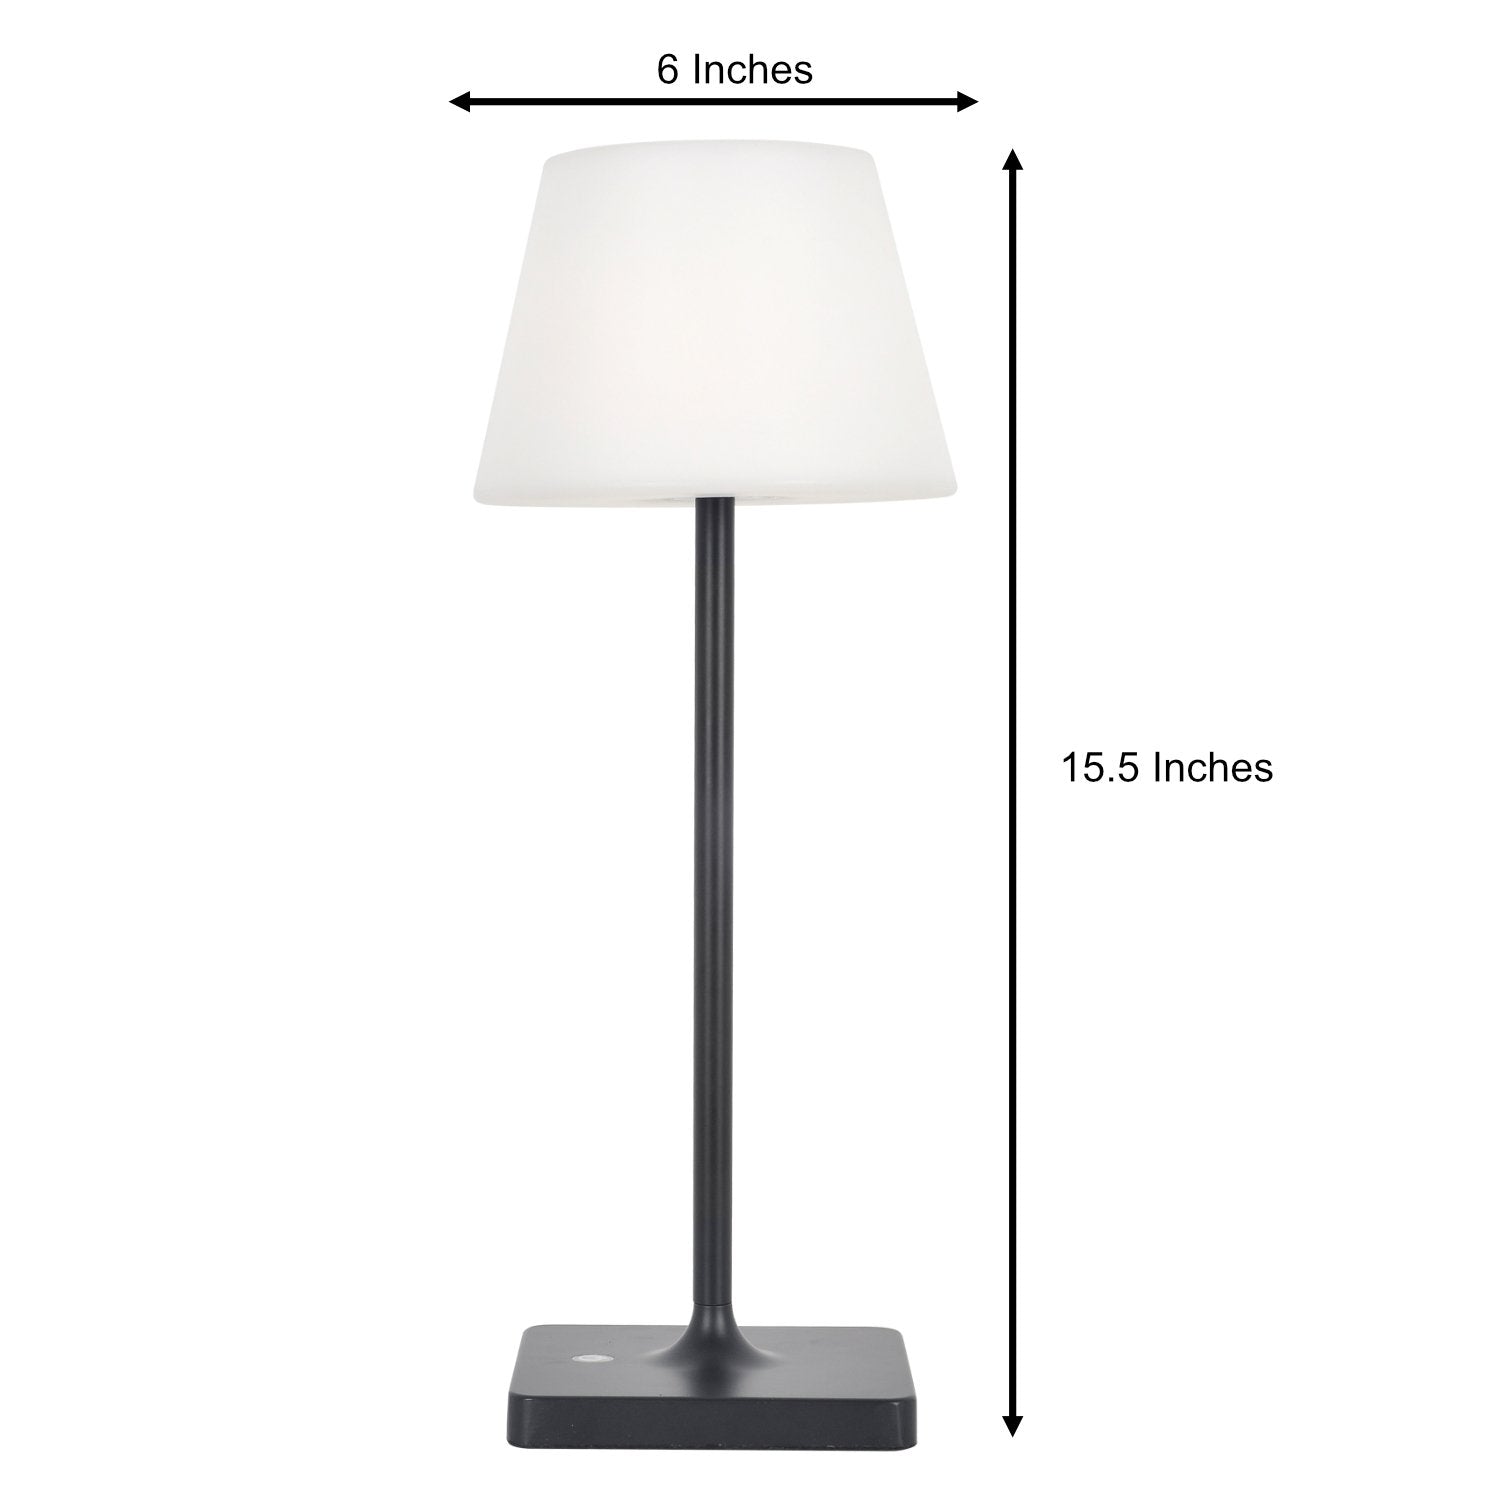 STRÅLA LED decorative table lamp, glass battery operated/dark gray